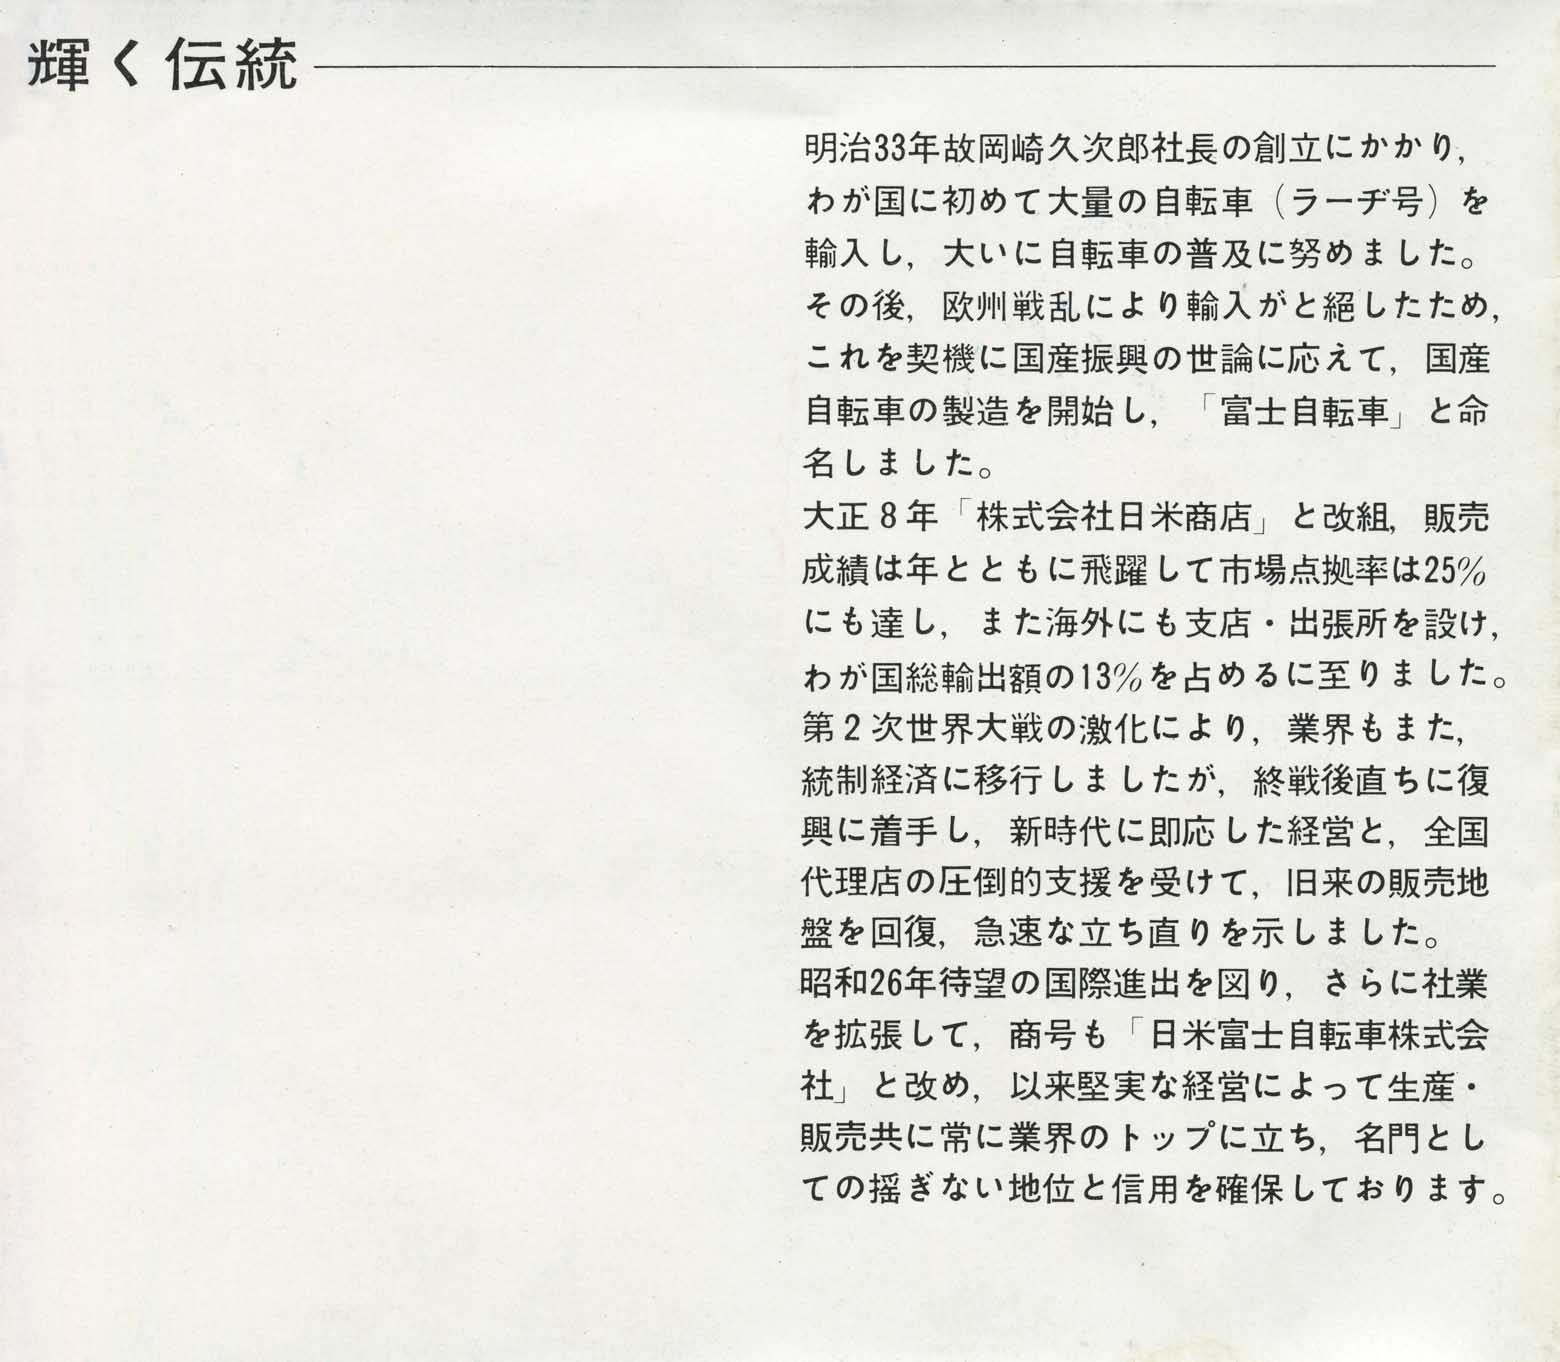 Fuji Bicycle Catalog scan 02 main image